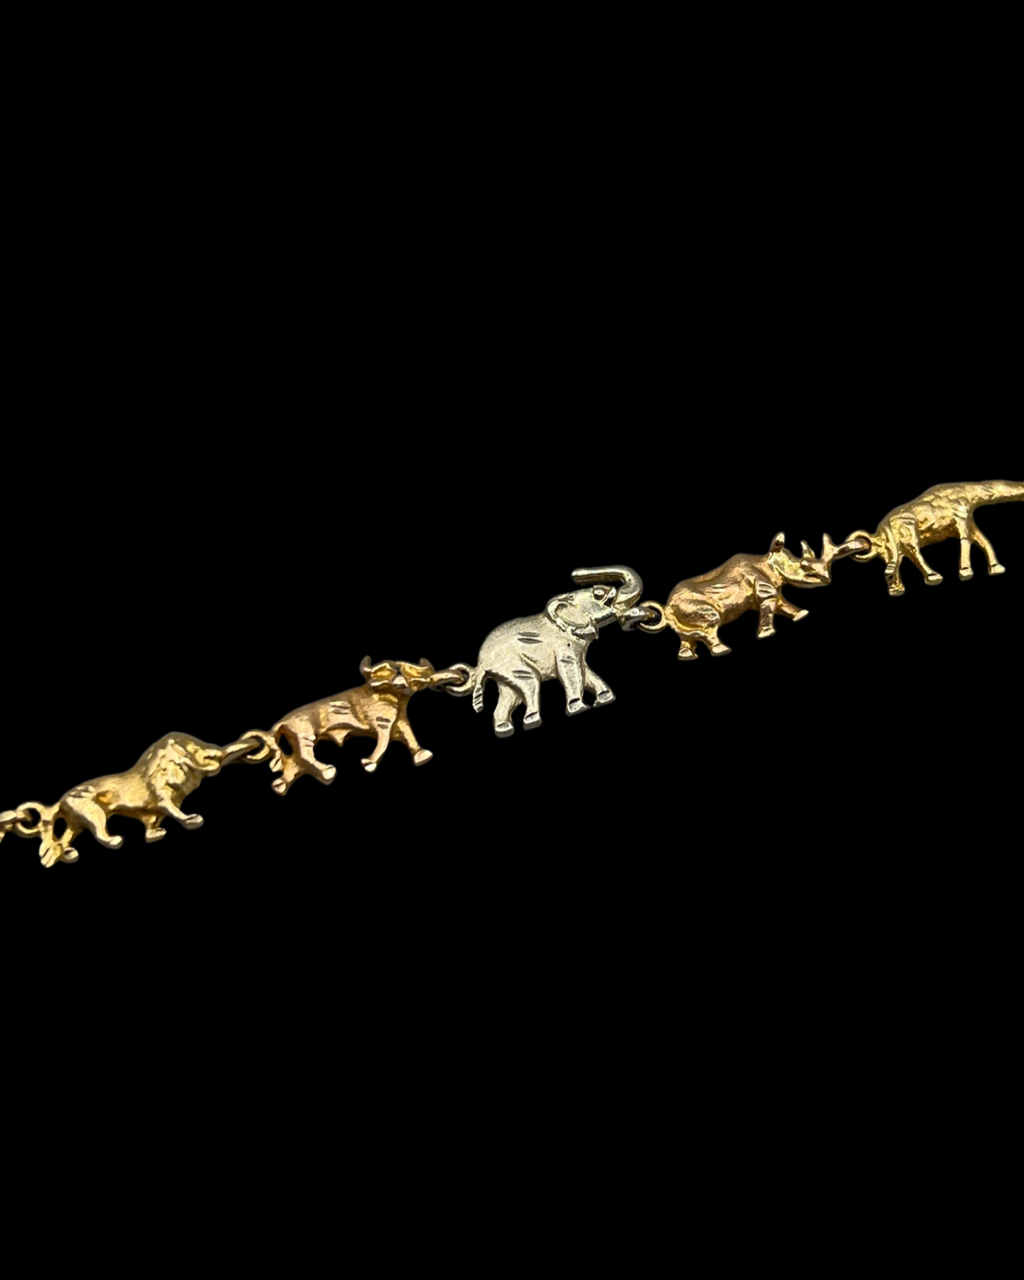 18ct Gold African Safari Animals Bracelet depicting Elephant, Lion etc, Very Good Condition 9.8g, - Image 2 of 2